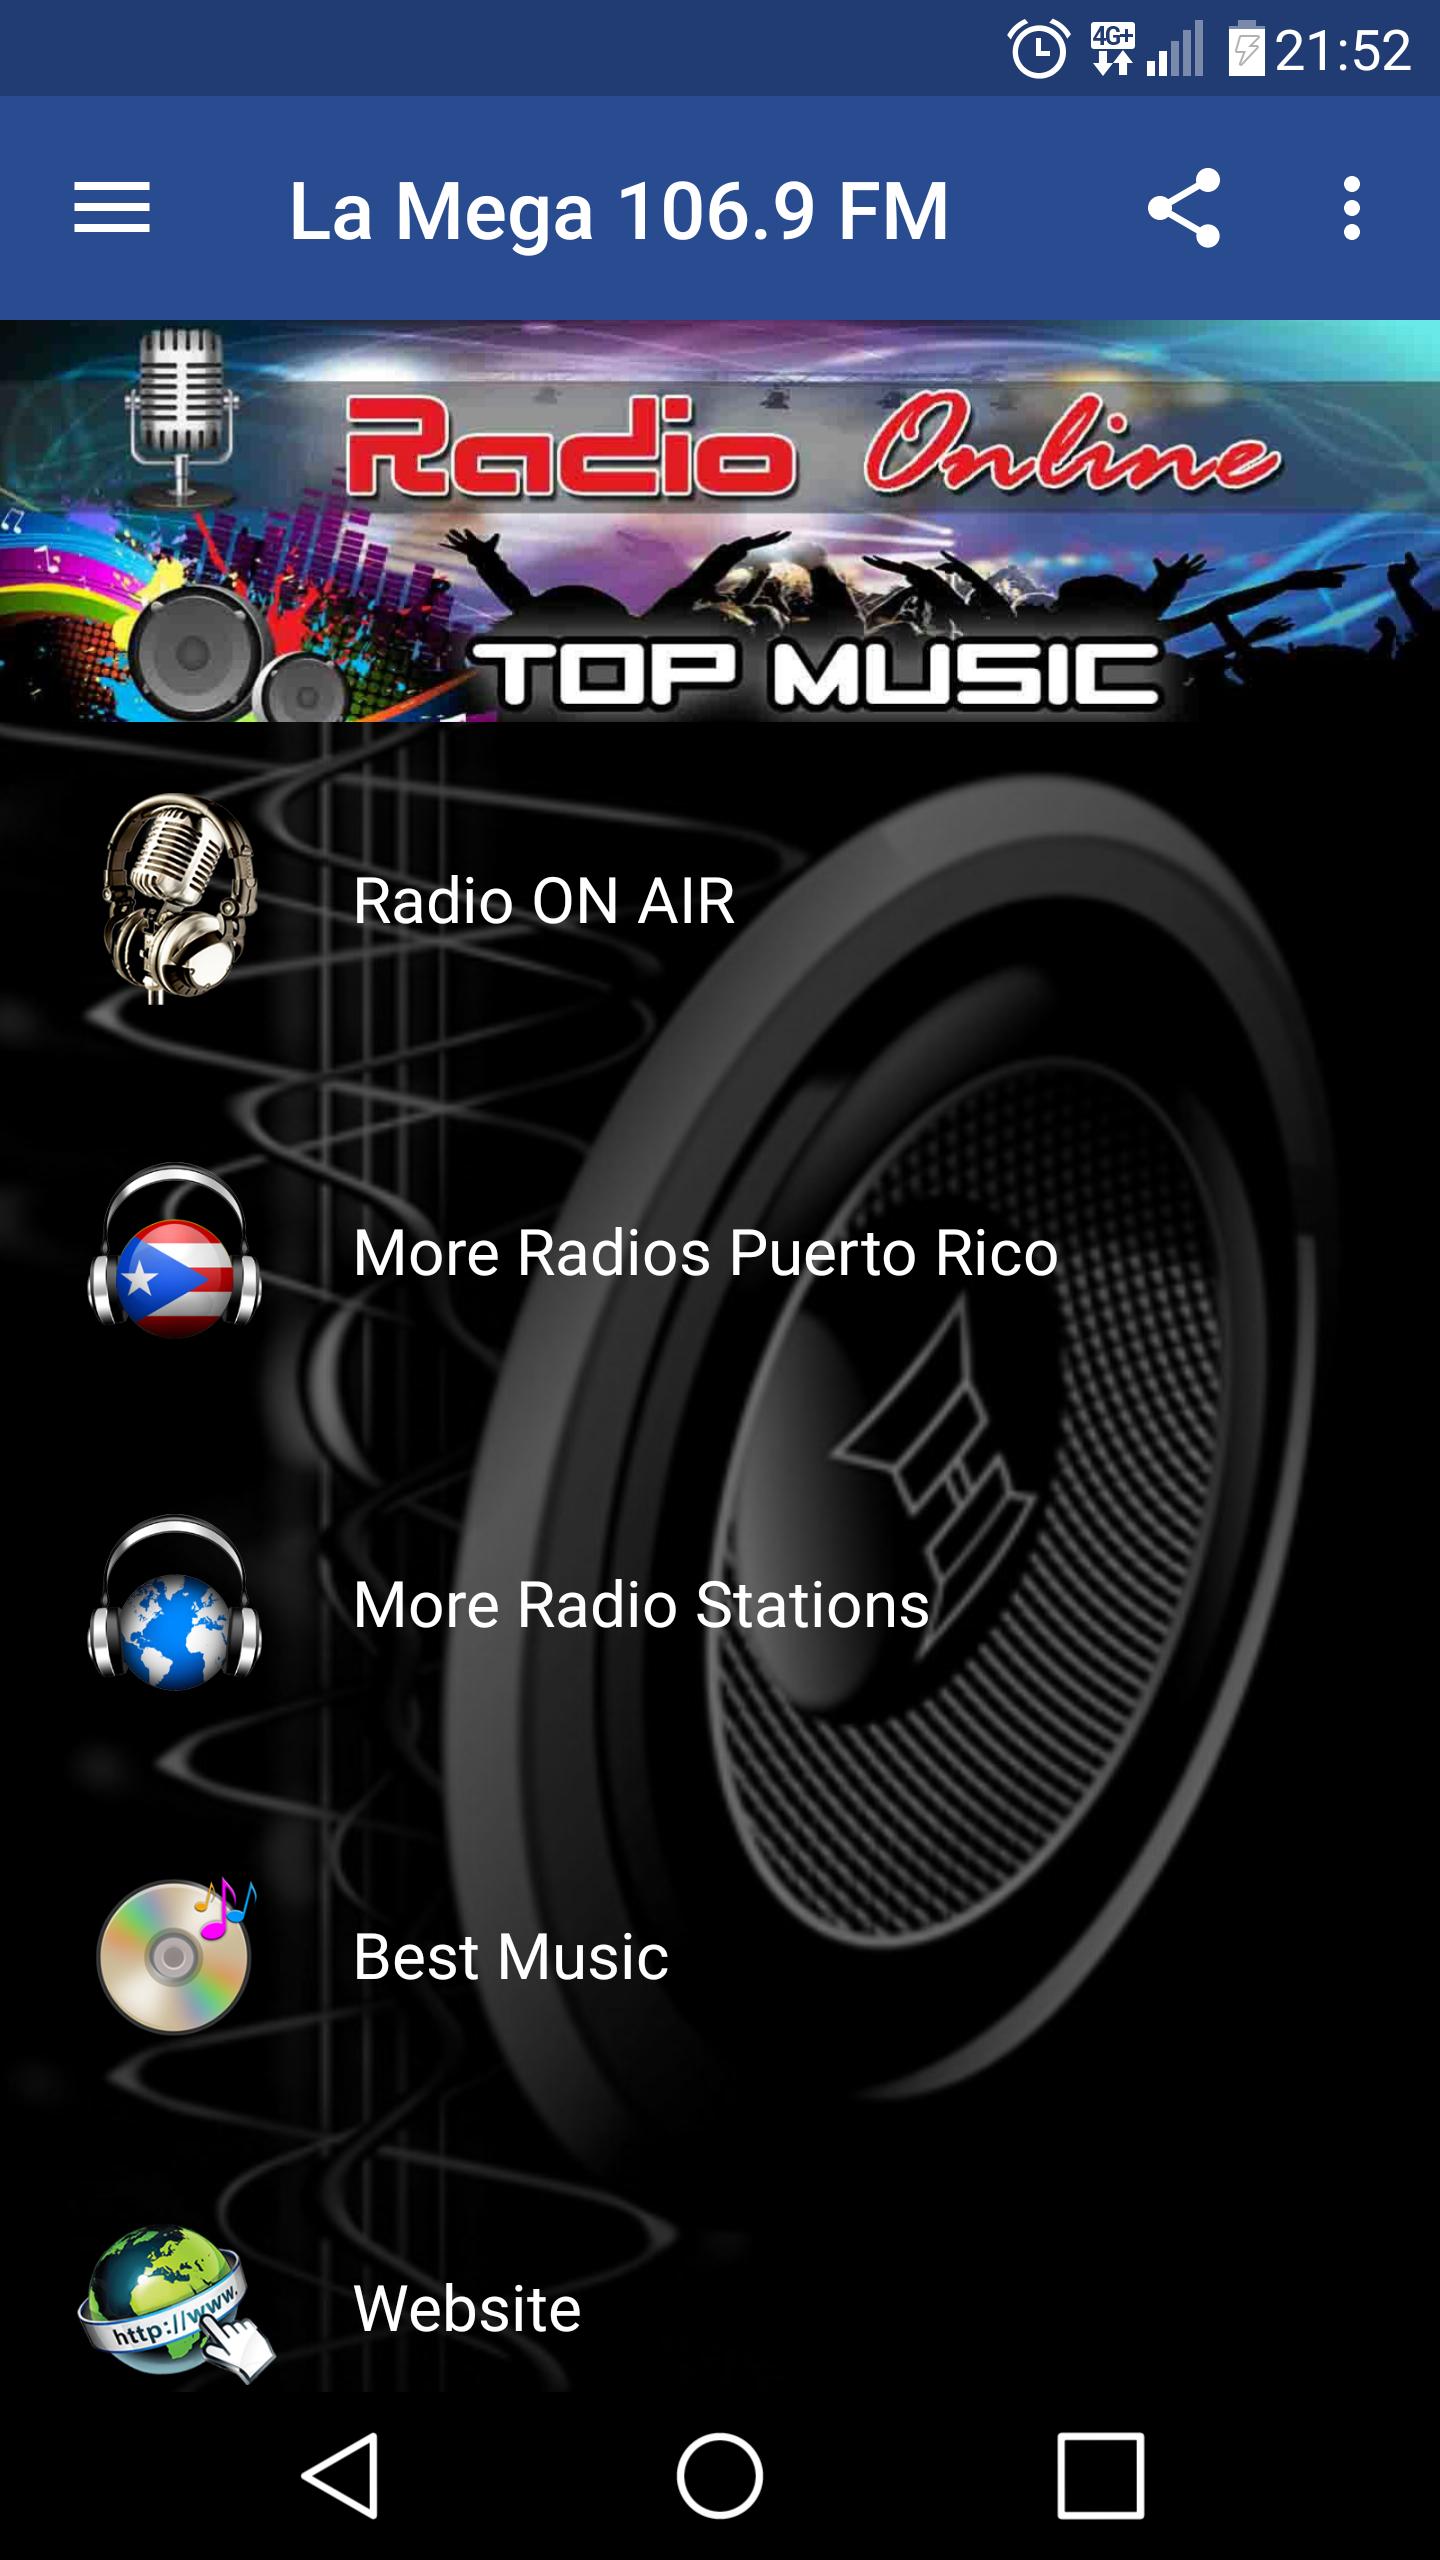 La Mega 106.9 FM for Android - APK Download